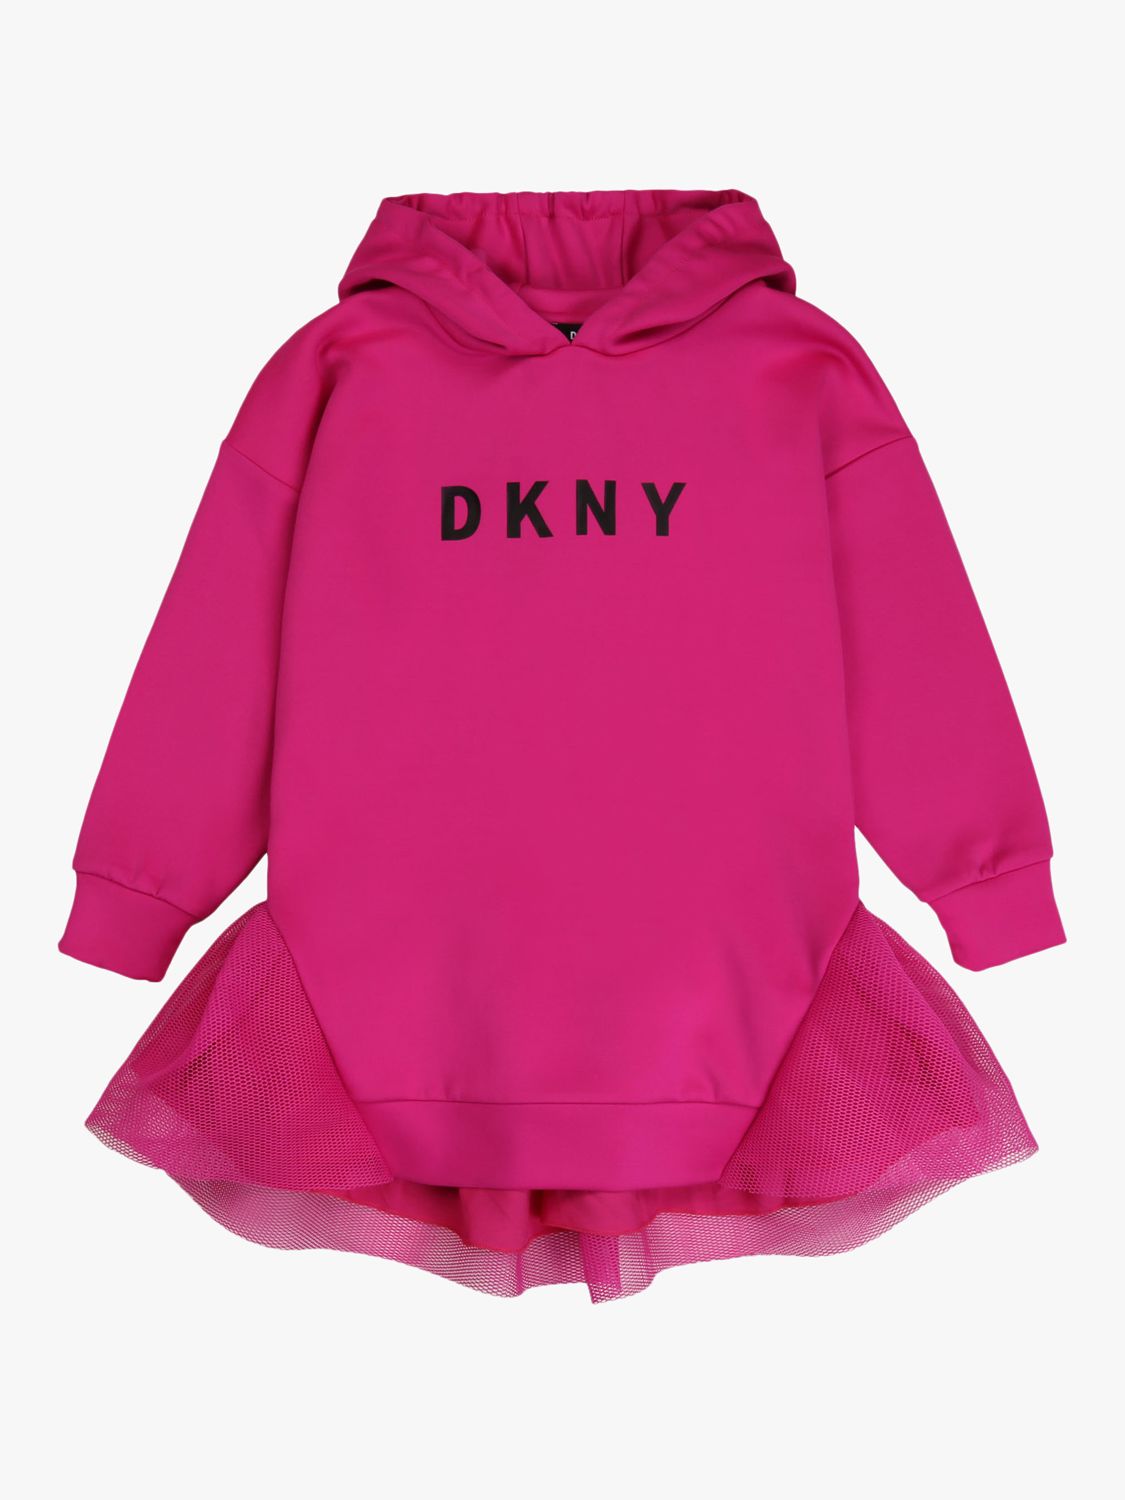 Image of DKNY Girls Hooded Sweatshirt Dress Fuschia